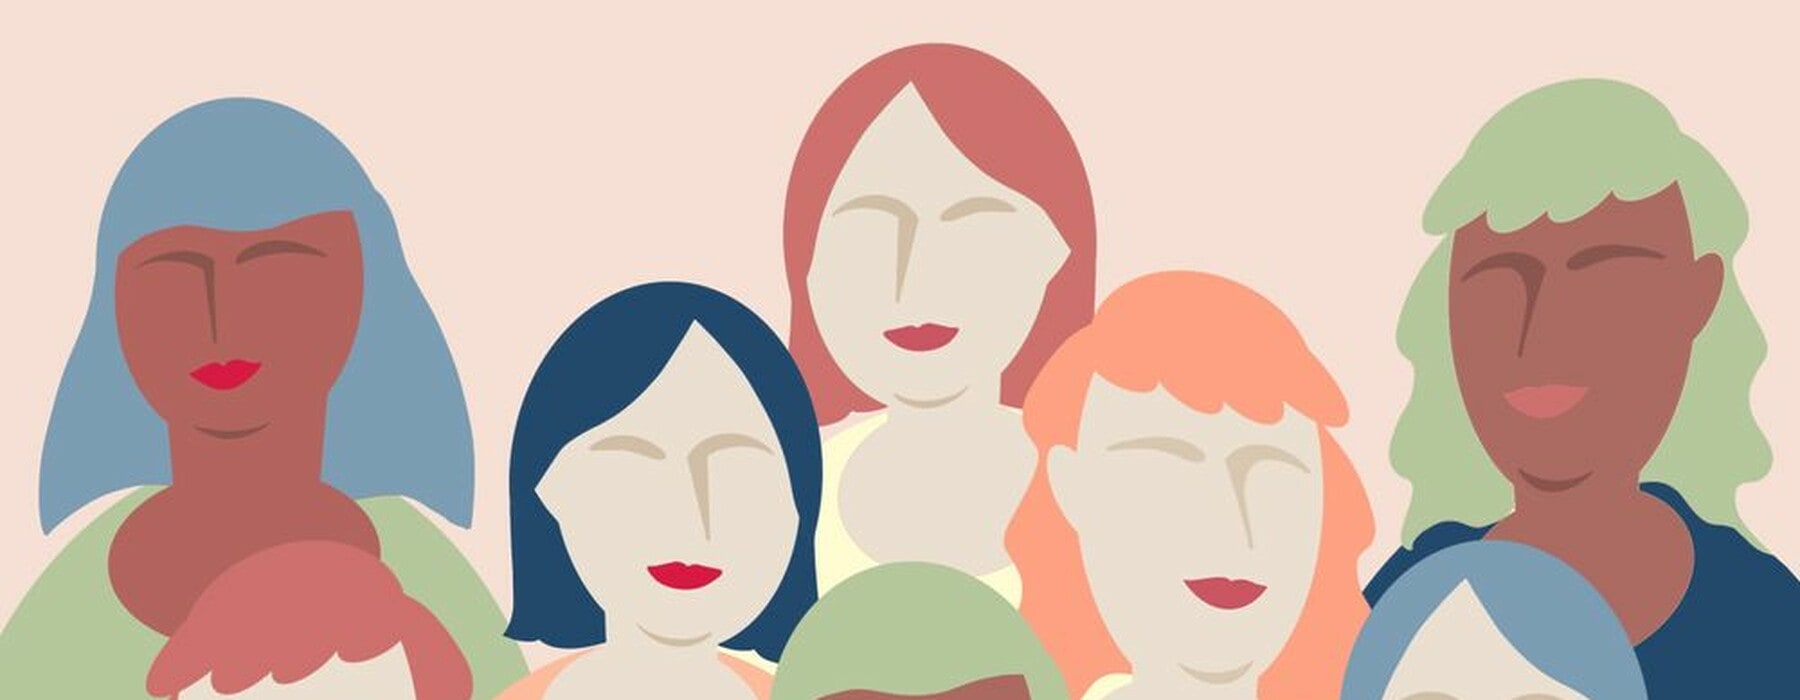 Illustration of group of women